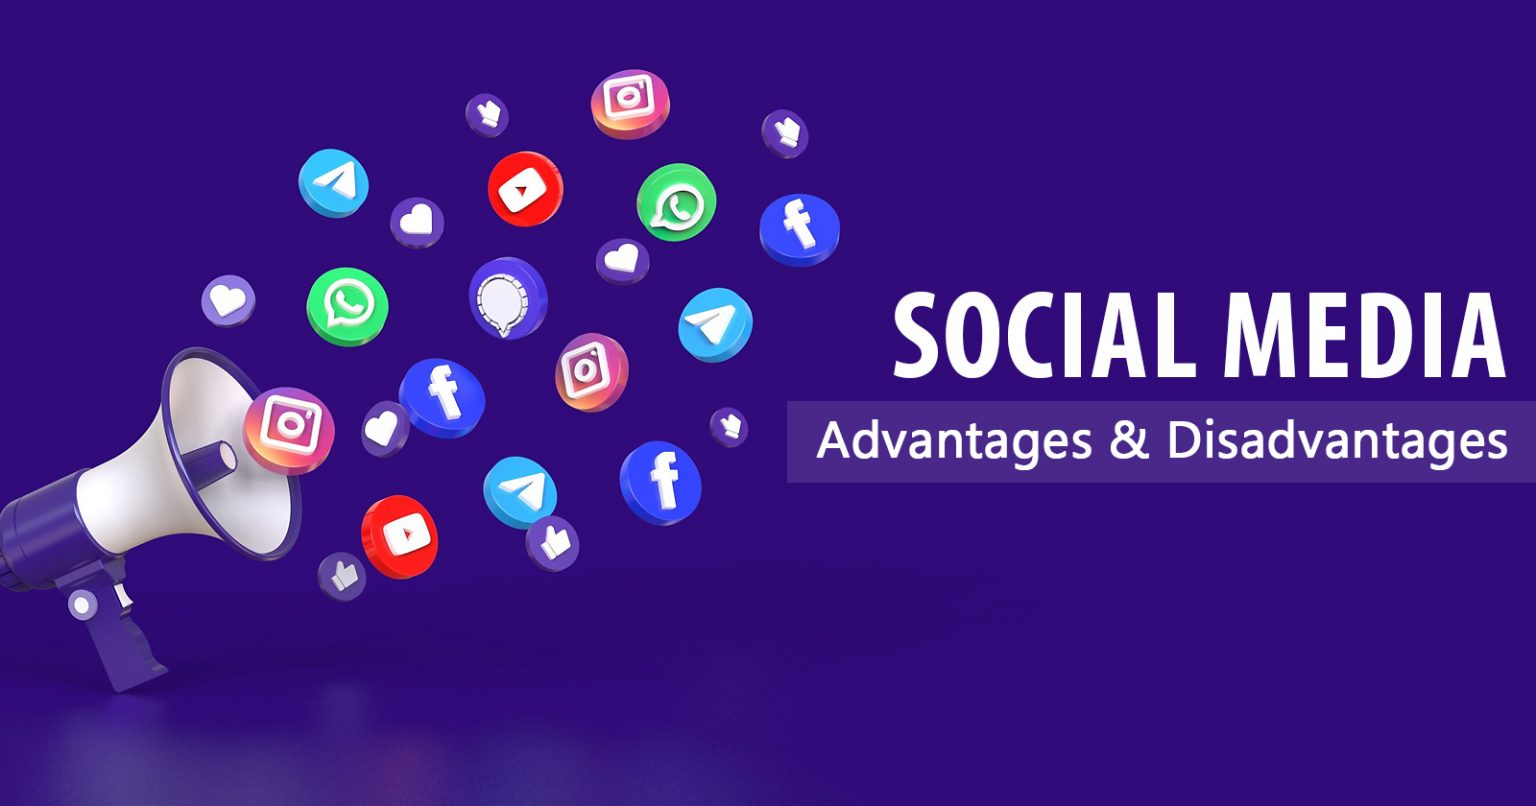 presentation advantages and disadvantages of social media